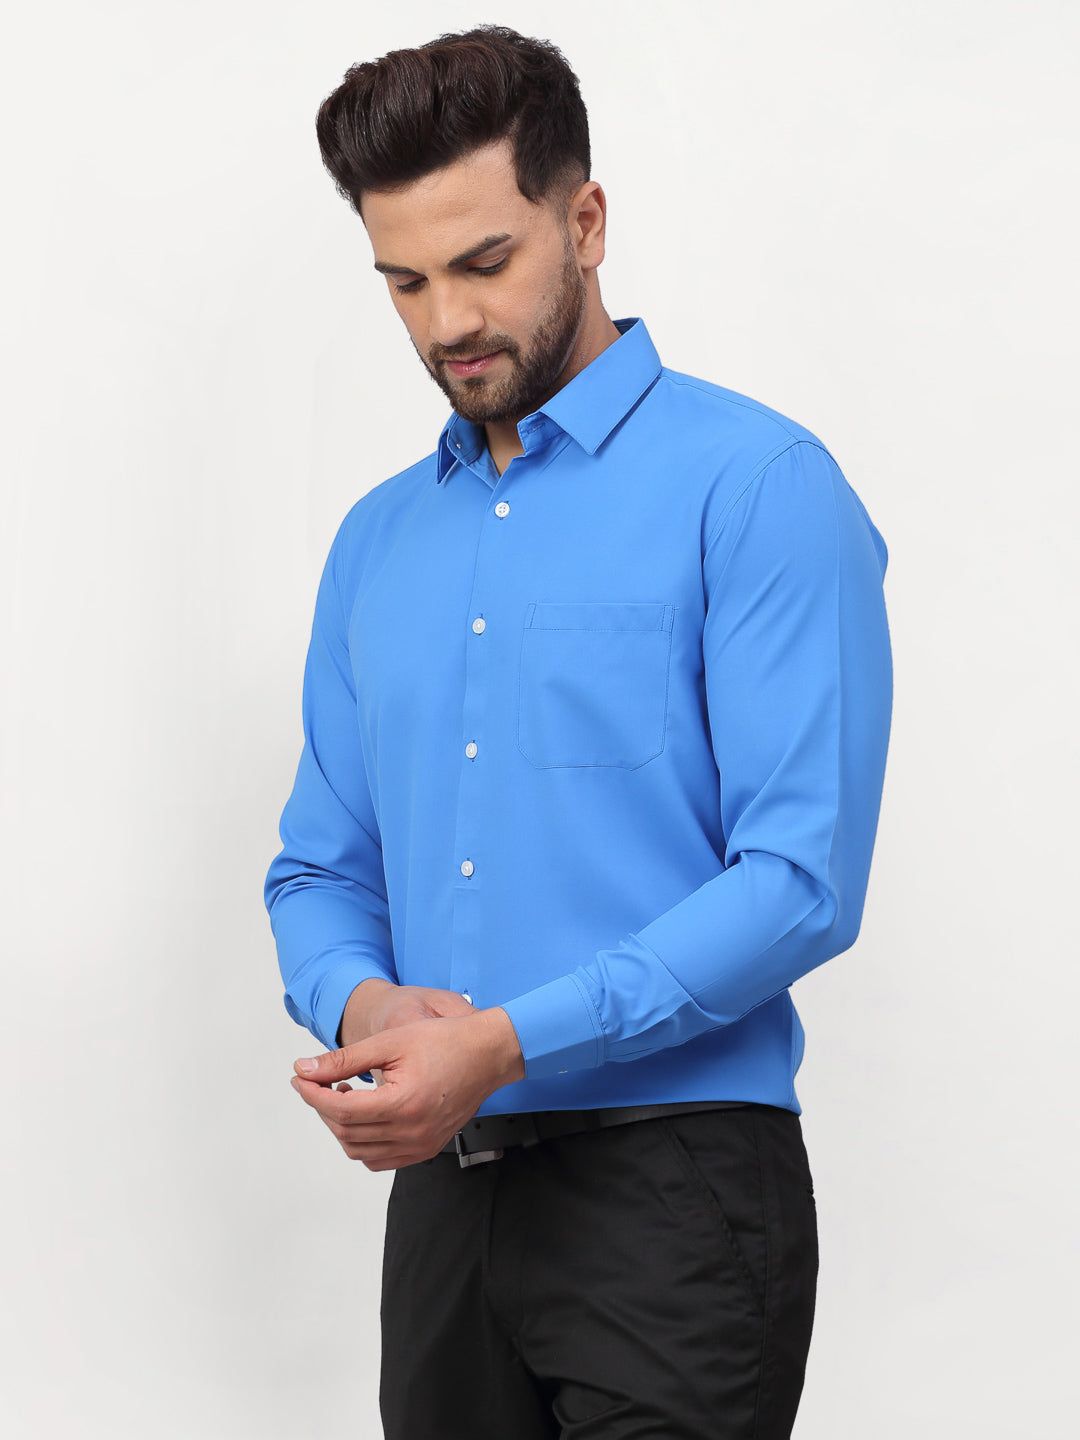 Men's Blue Solid Formal Shirts ( SF 777Sky ) - Jainish